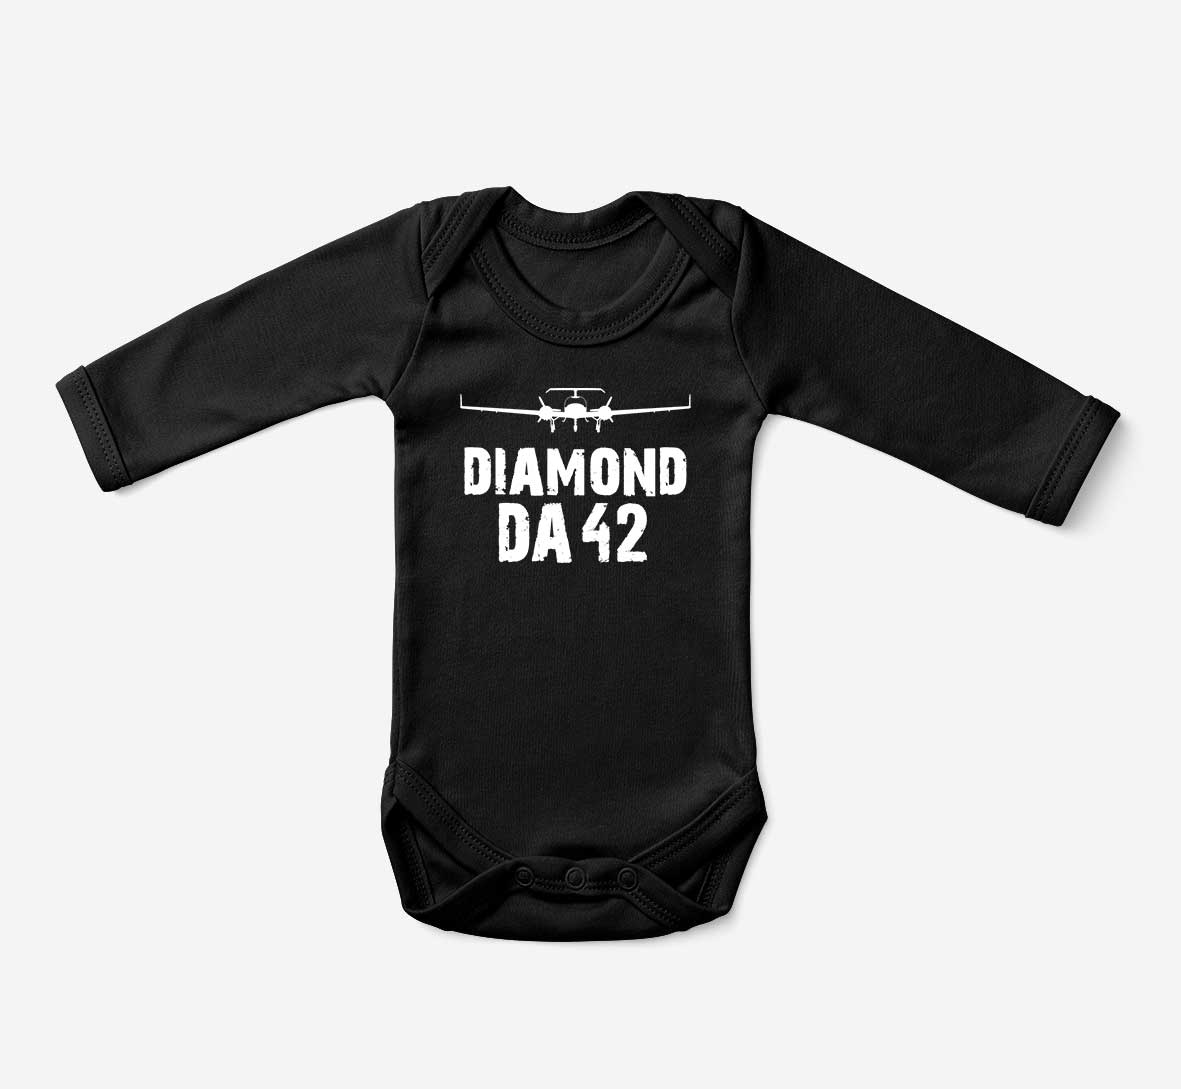 Diamond DA42 & Plane Designed Baby Bodysuits